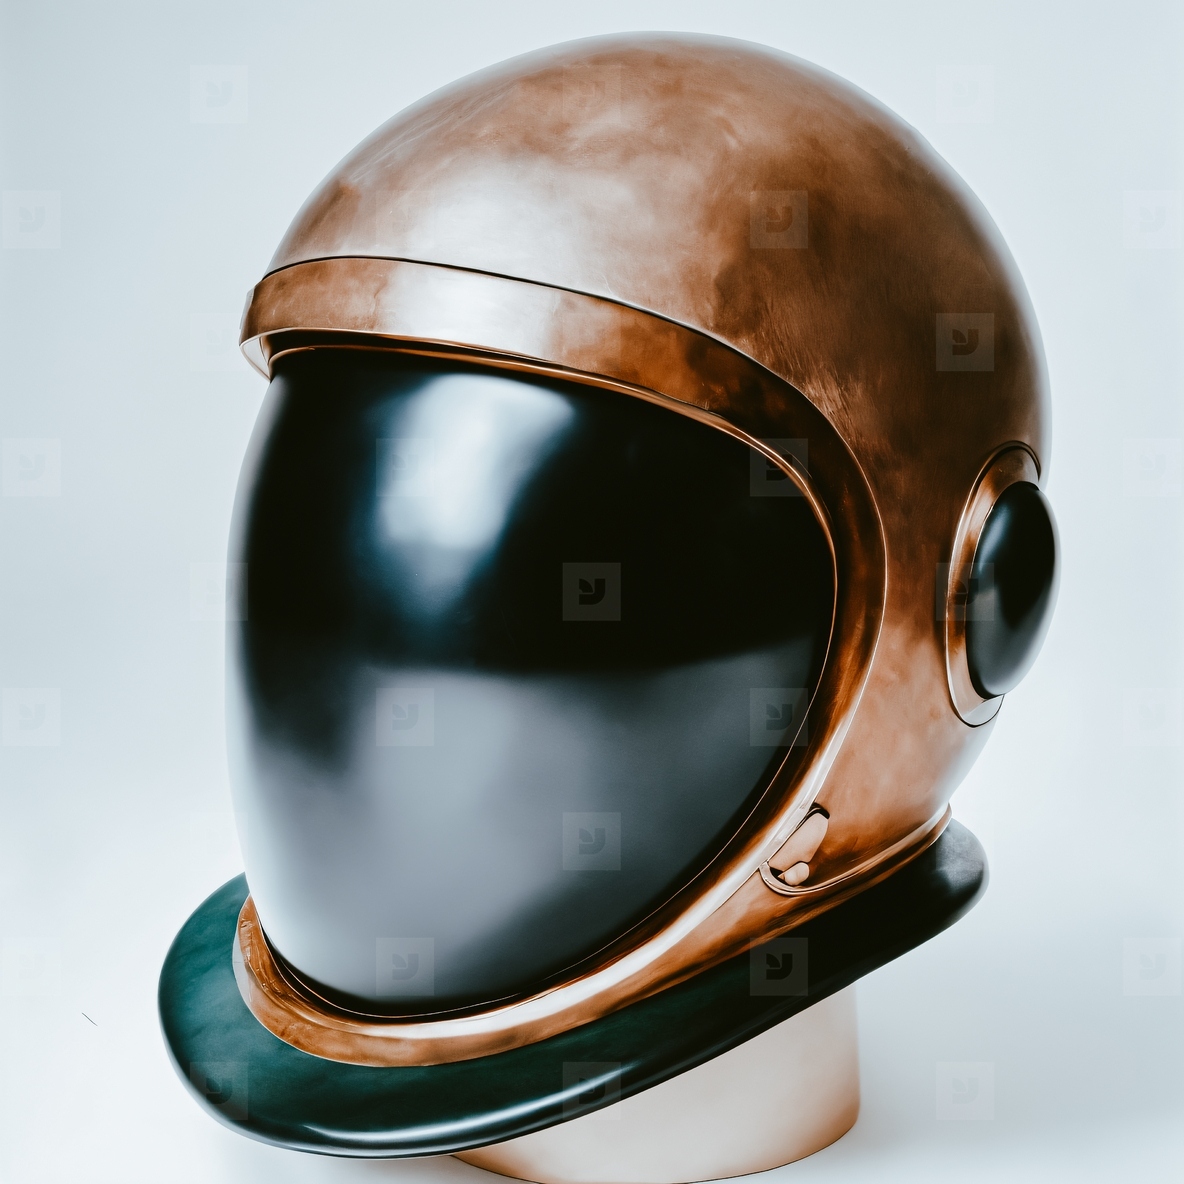 Abstract Space Helmet 10